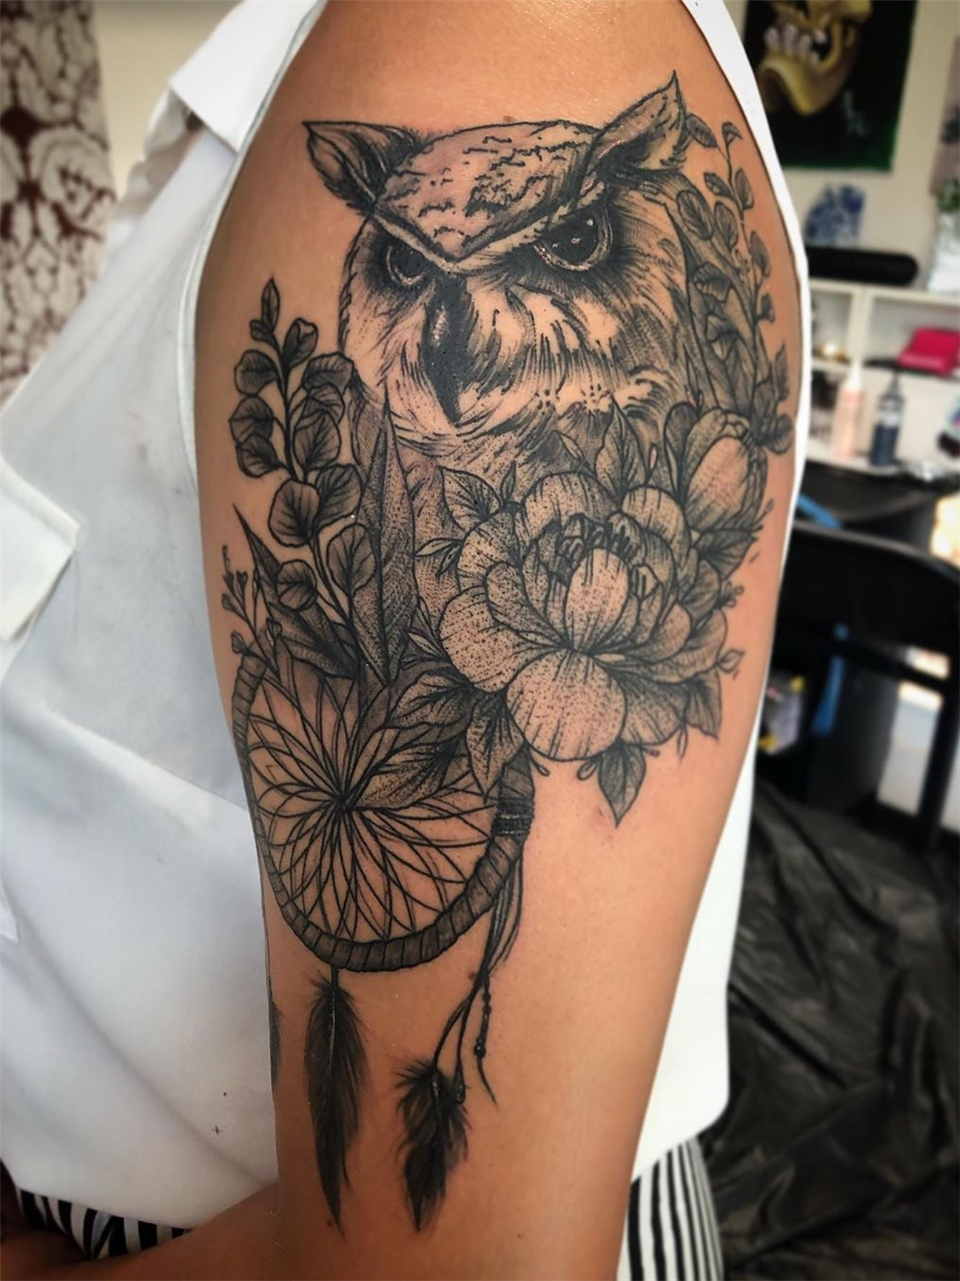 Owl tattoo on forearm by Zak Schulte